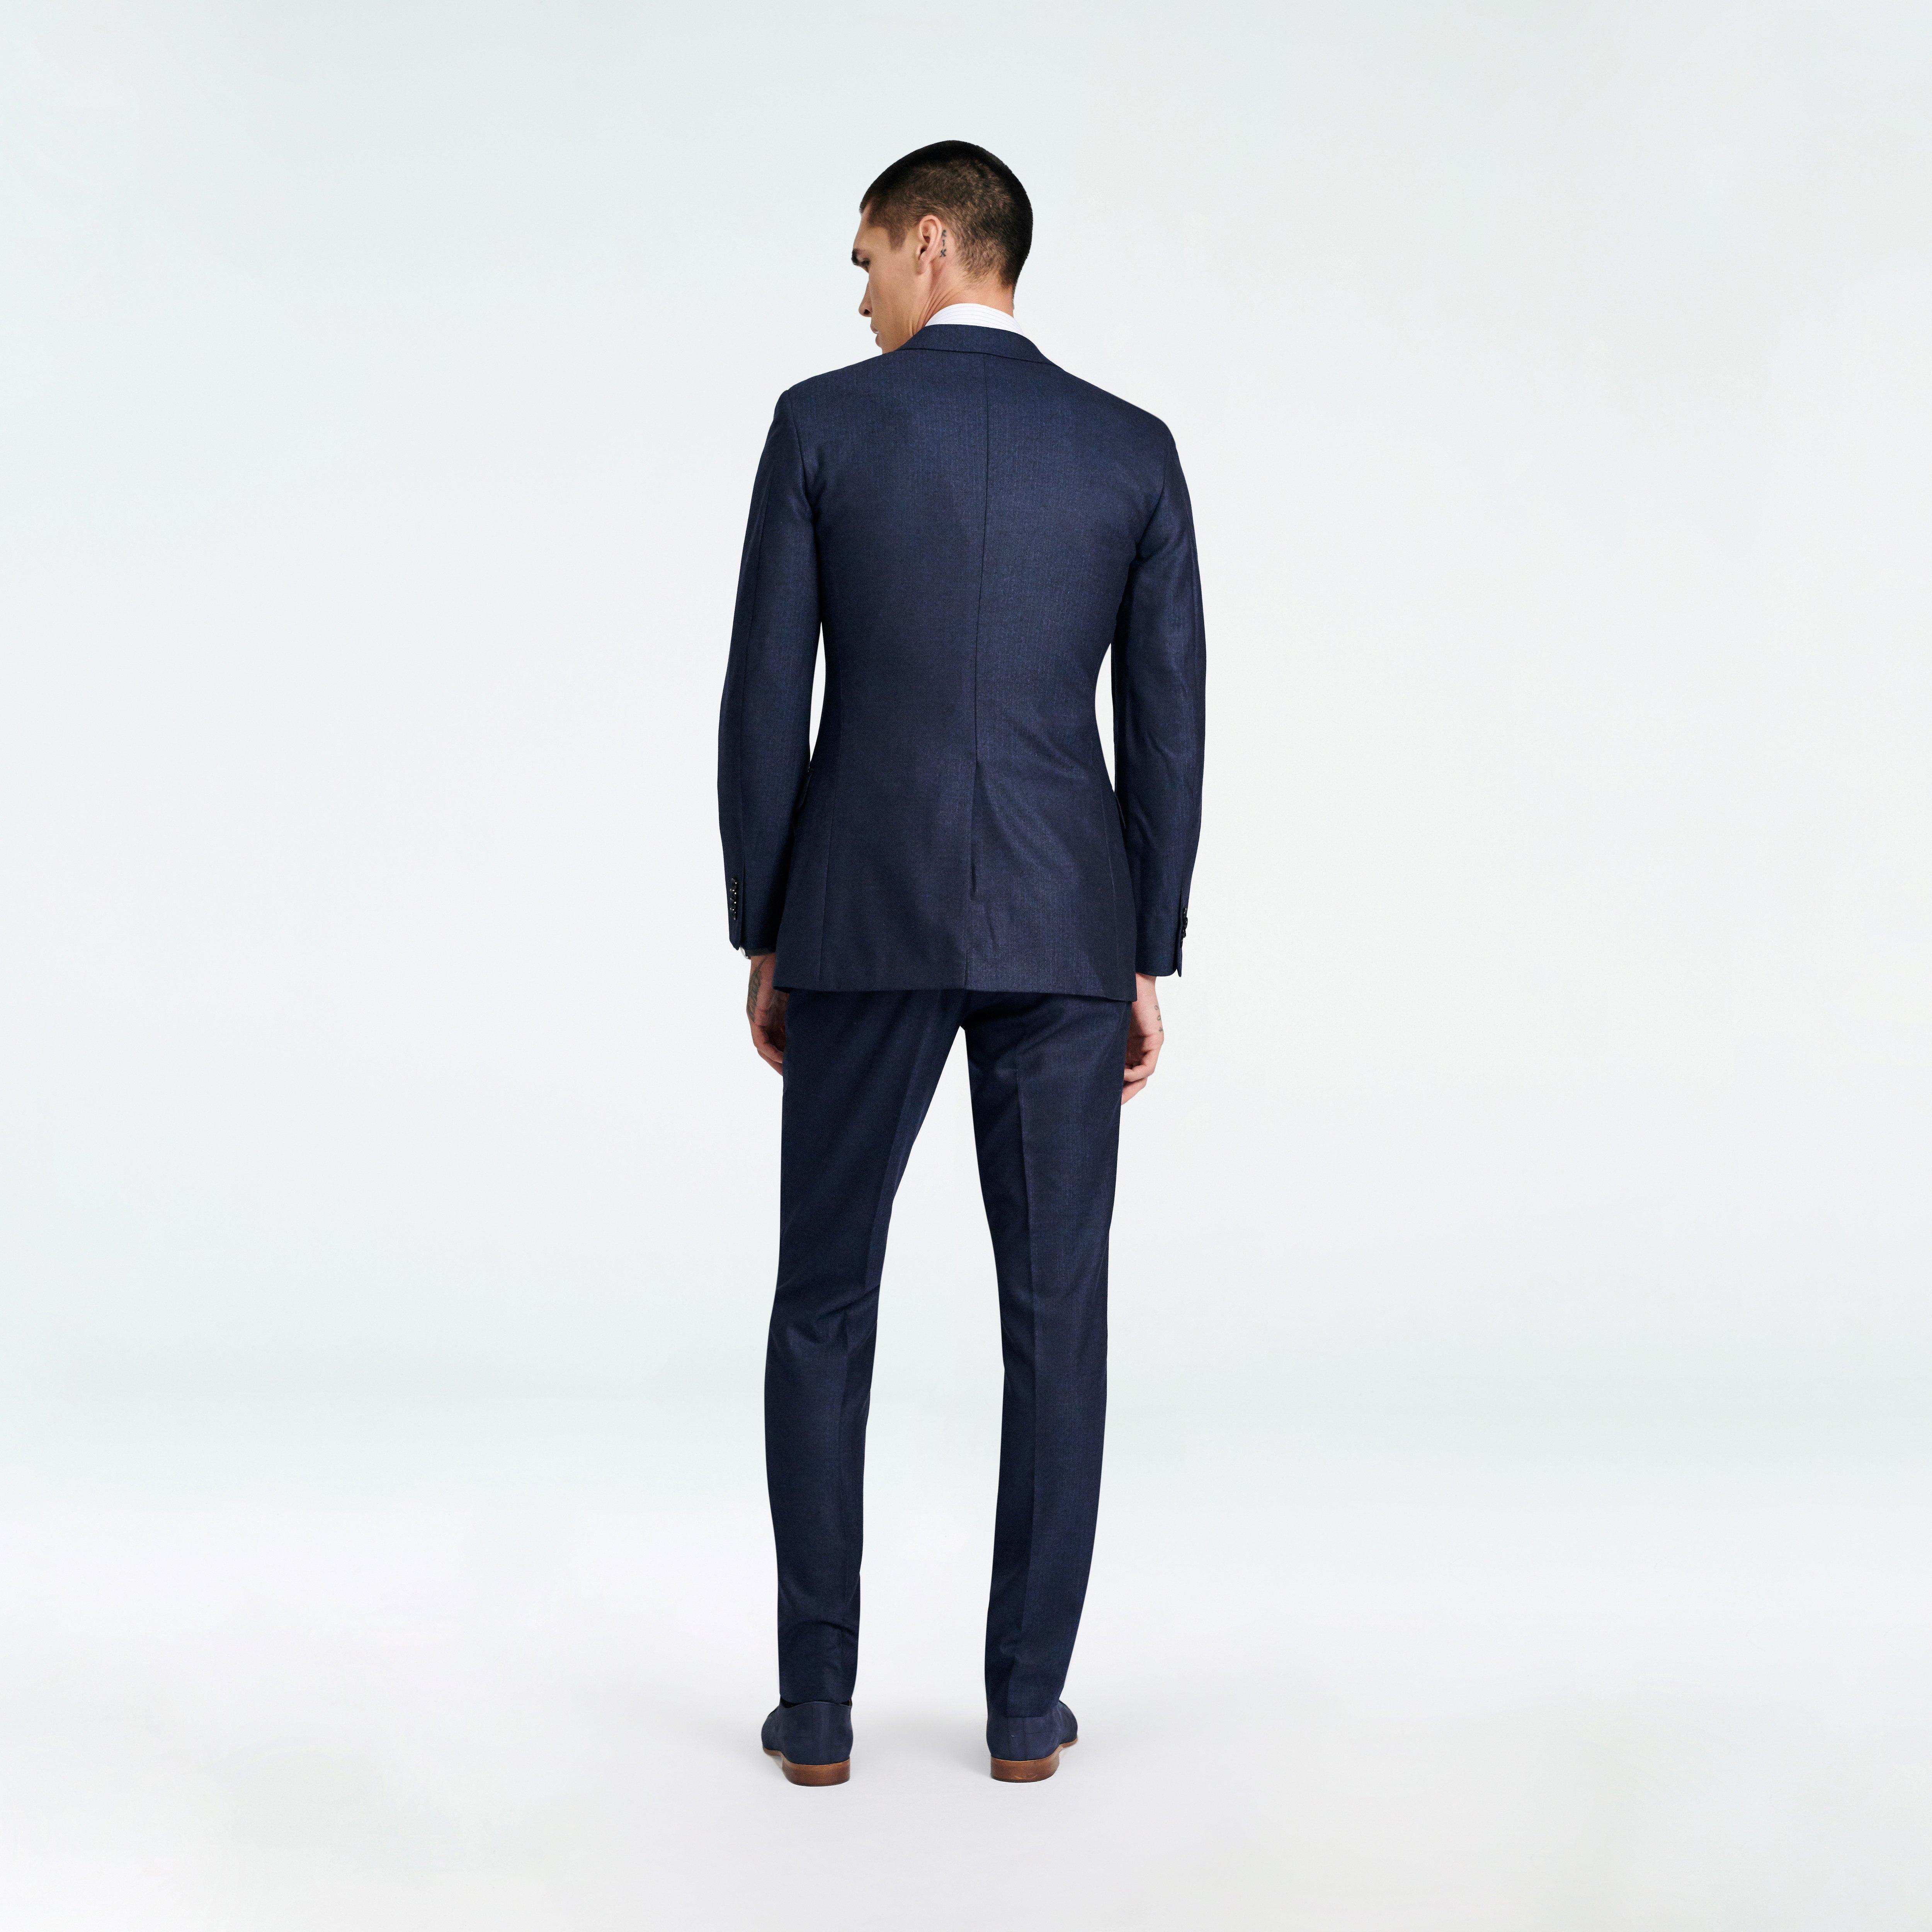 Custom Suits Made For You - Prescot Herringbone Navy Suit | INDOCHINO